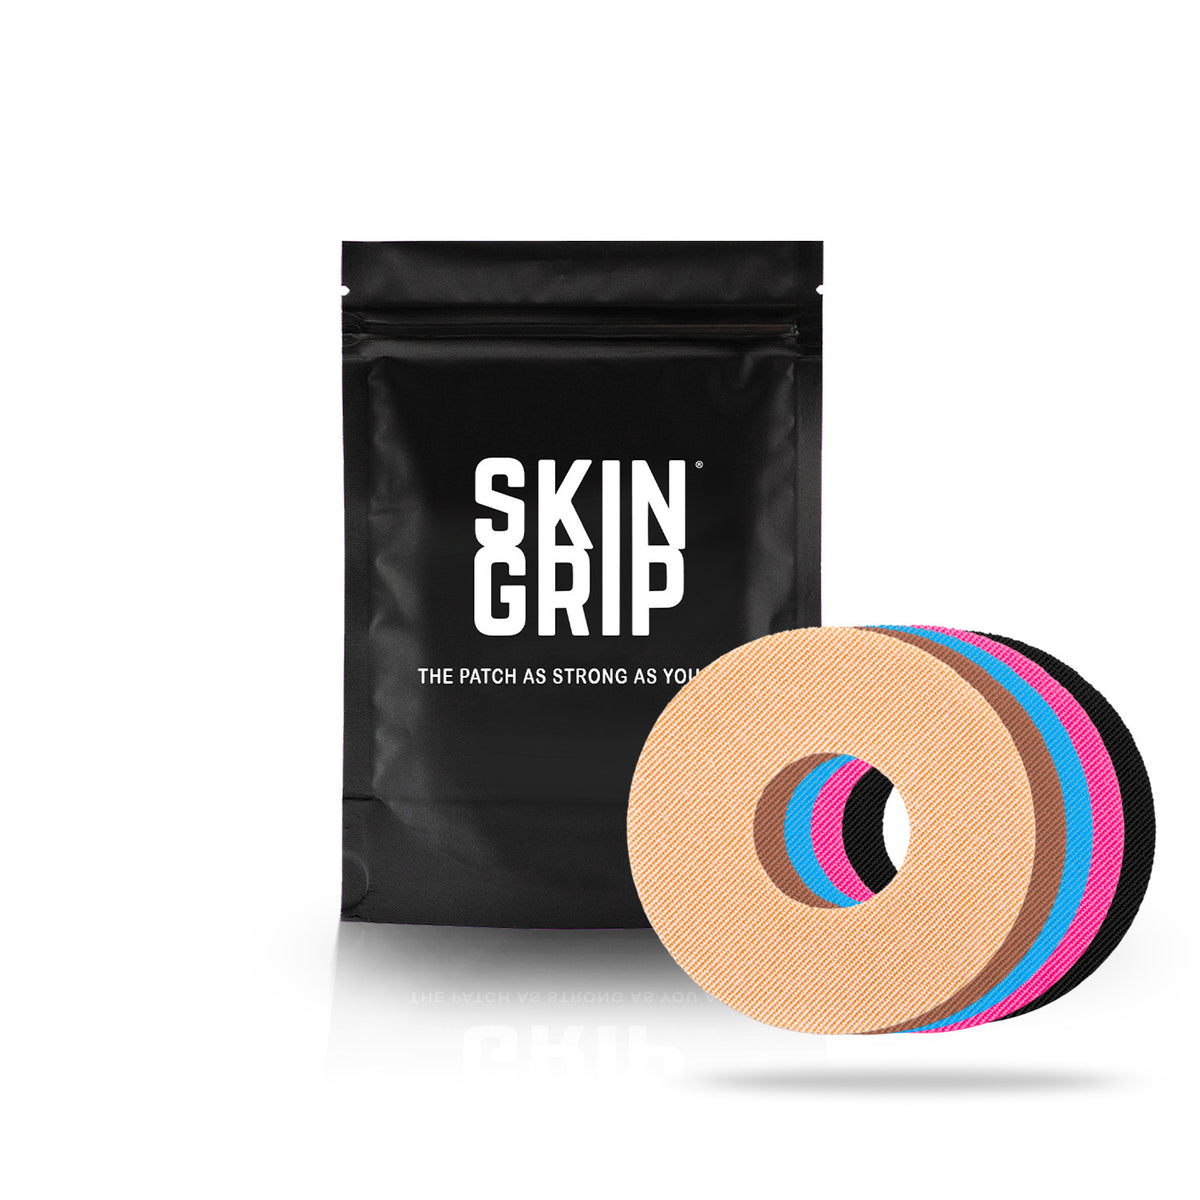 Skin Grip Original - Freestyle Libre/Pump Adhesive Patches